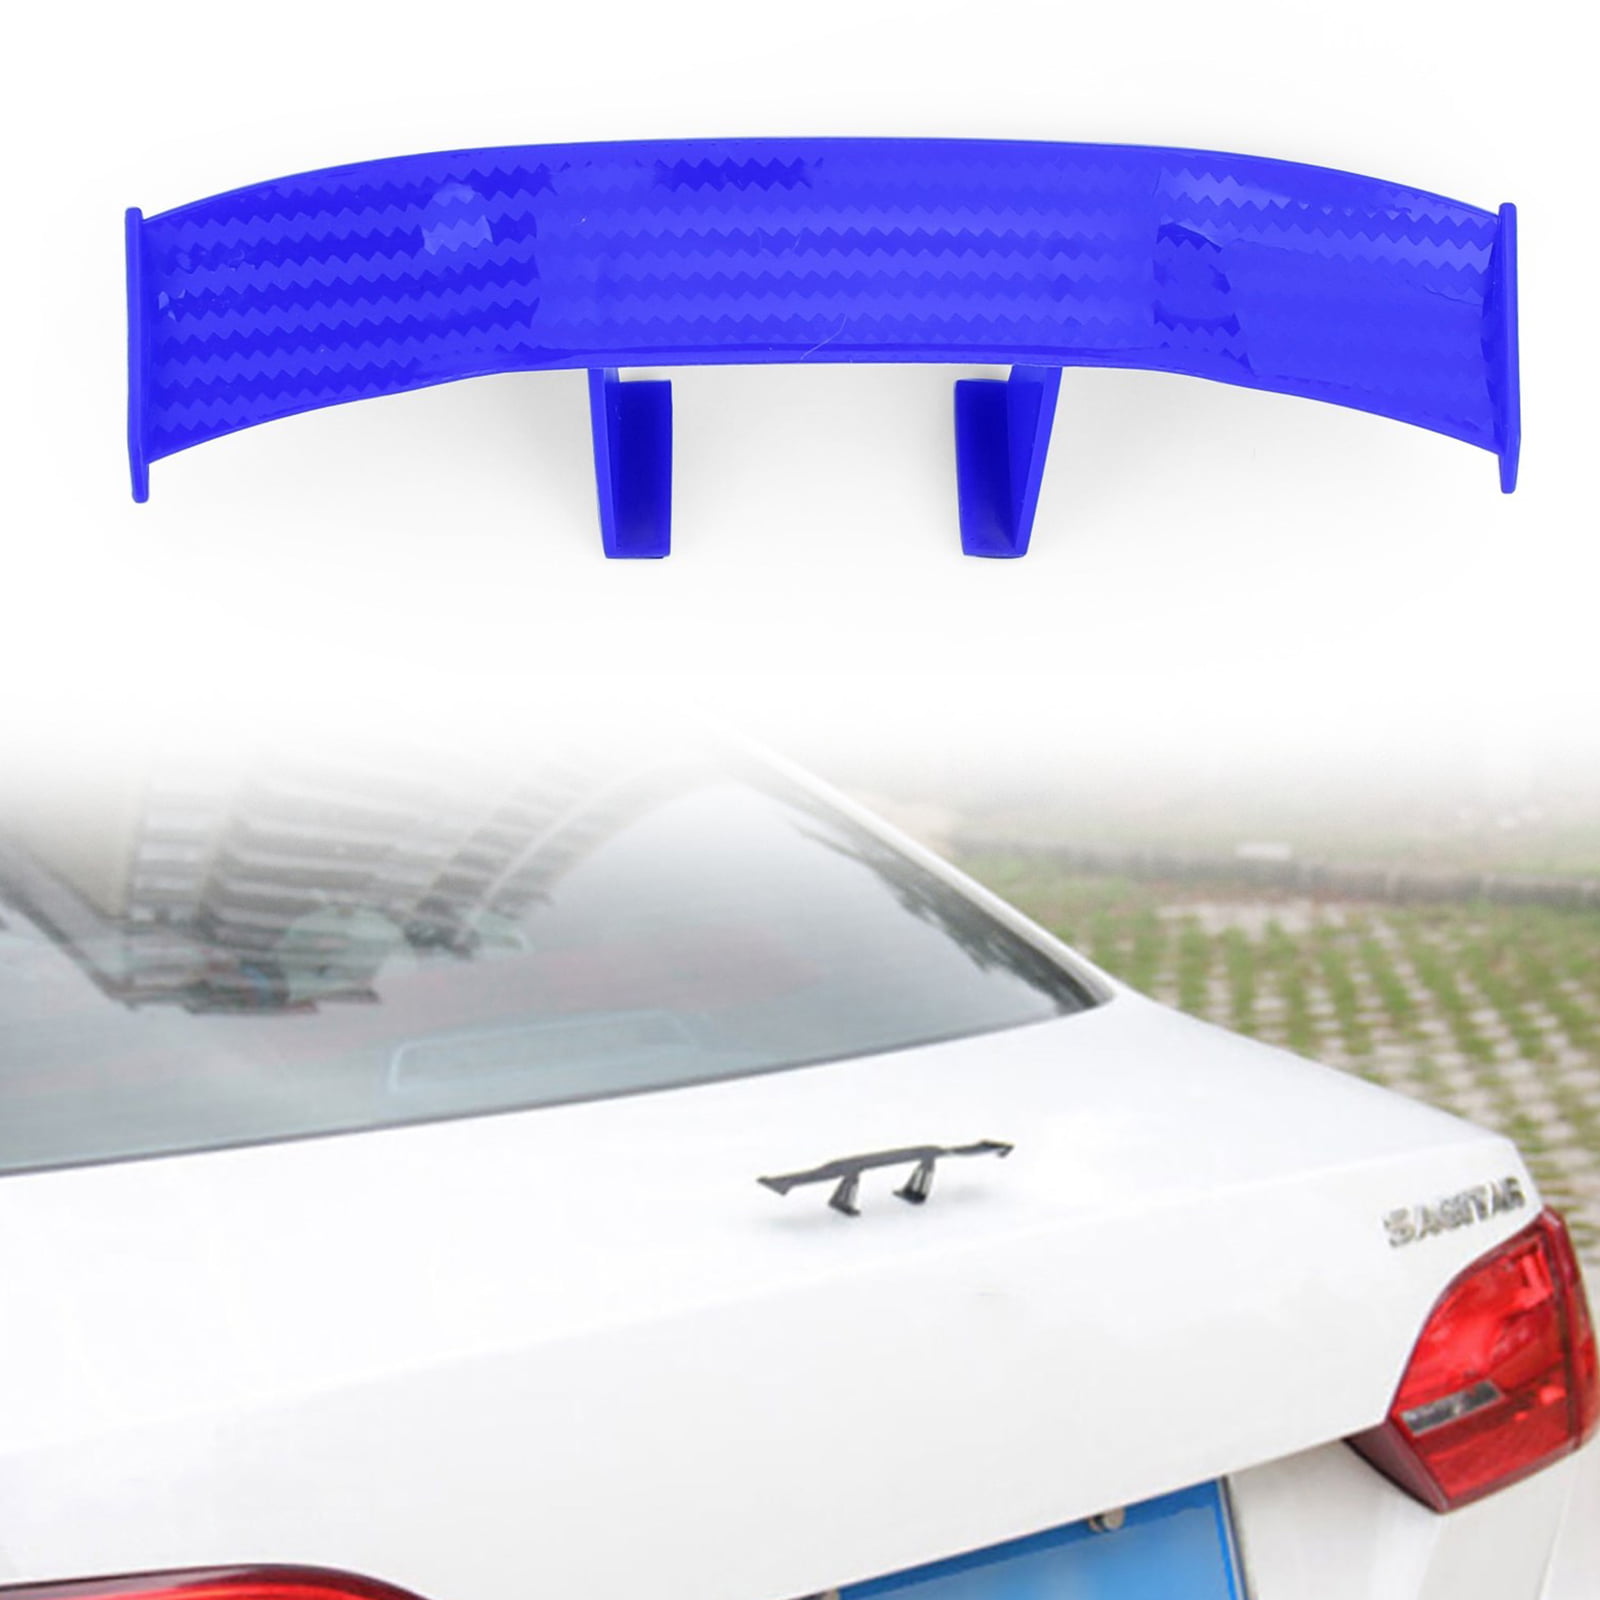 Universal Mini Spoiler Car Auto Tail Decoration Spoiler Wing Blue